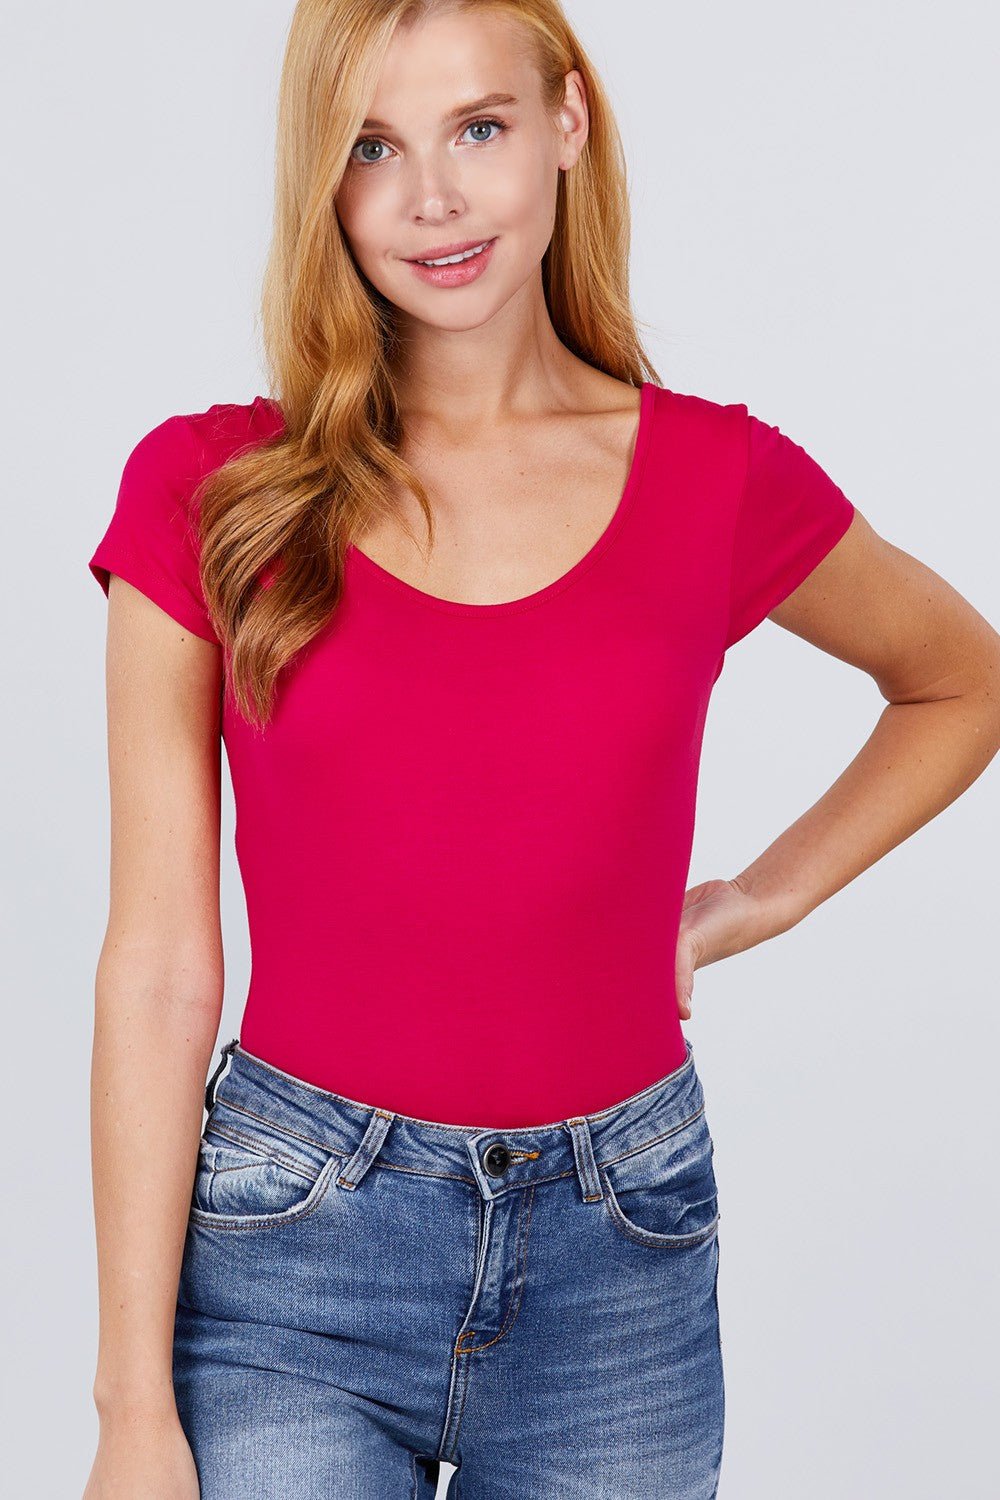 Our Best 95% Cotton 5% Spandex Solid Short Sleeve Scoop Neck Bodysuit (Hot Pink)